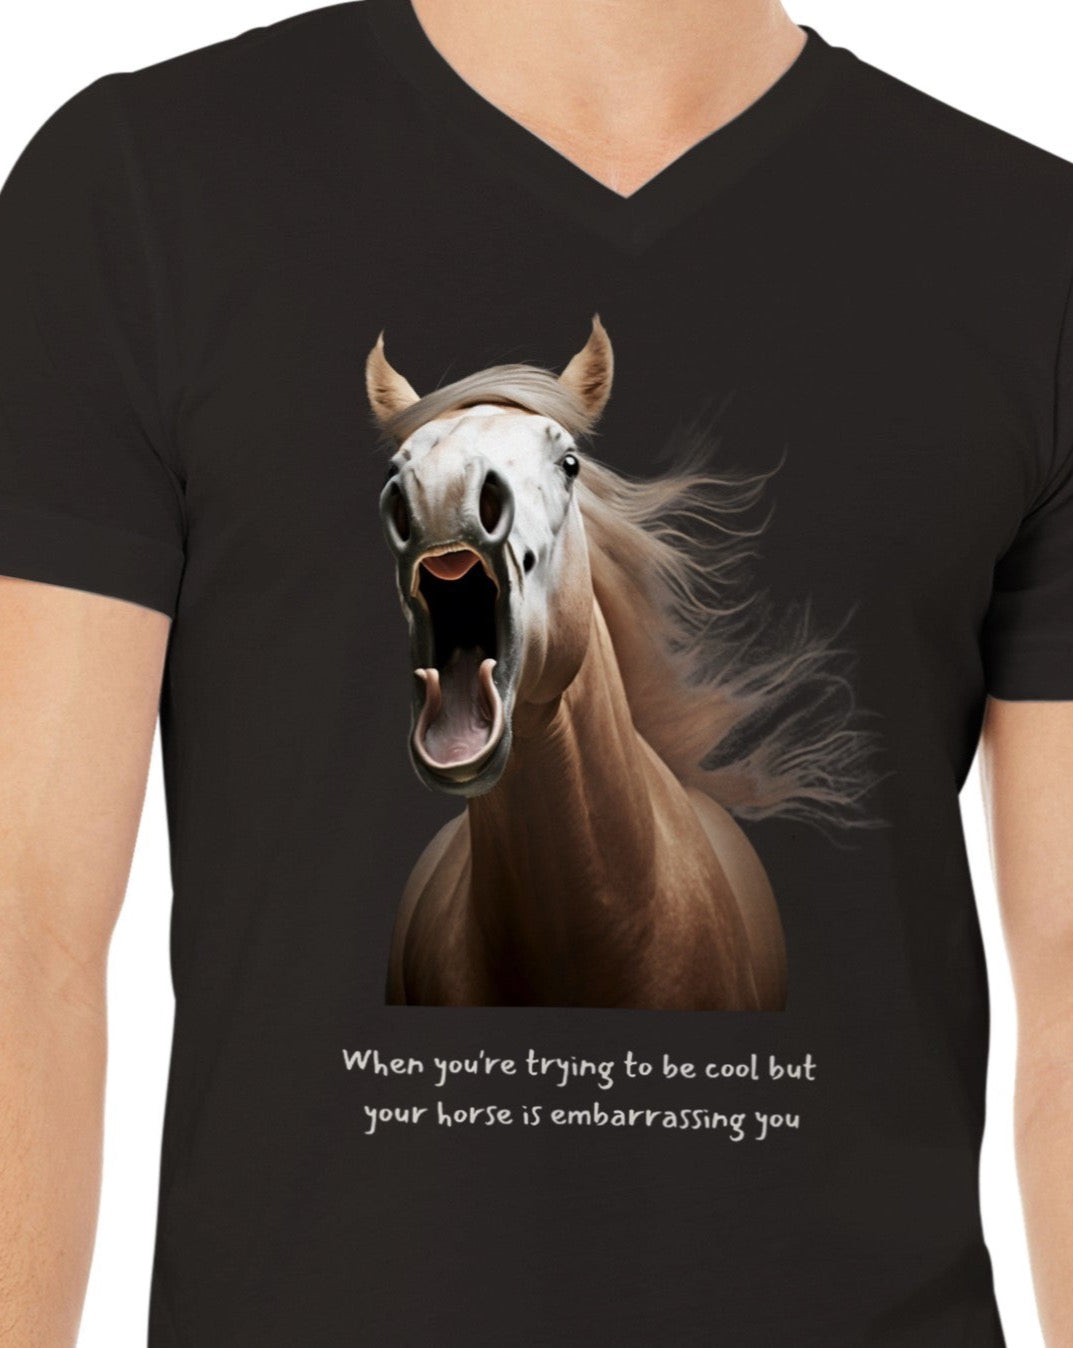 Funny horse T shirt